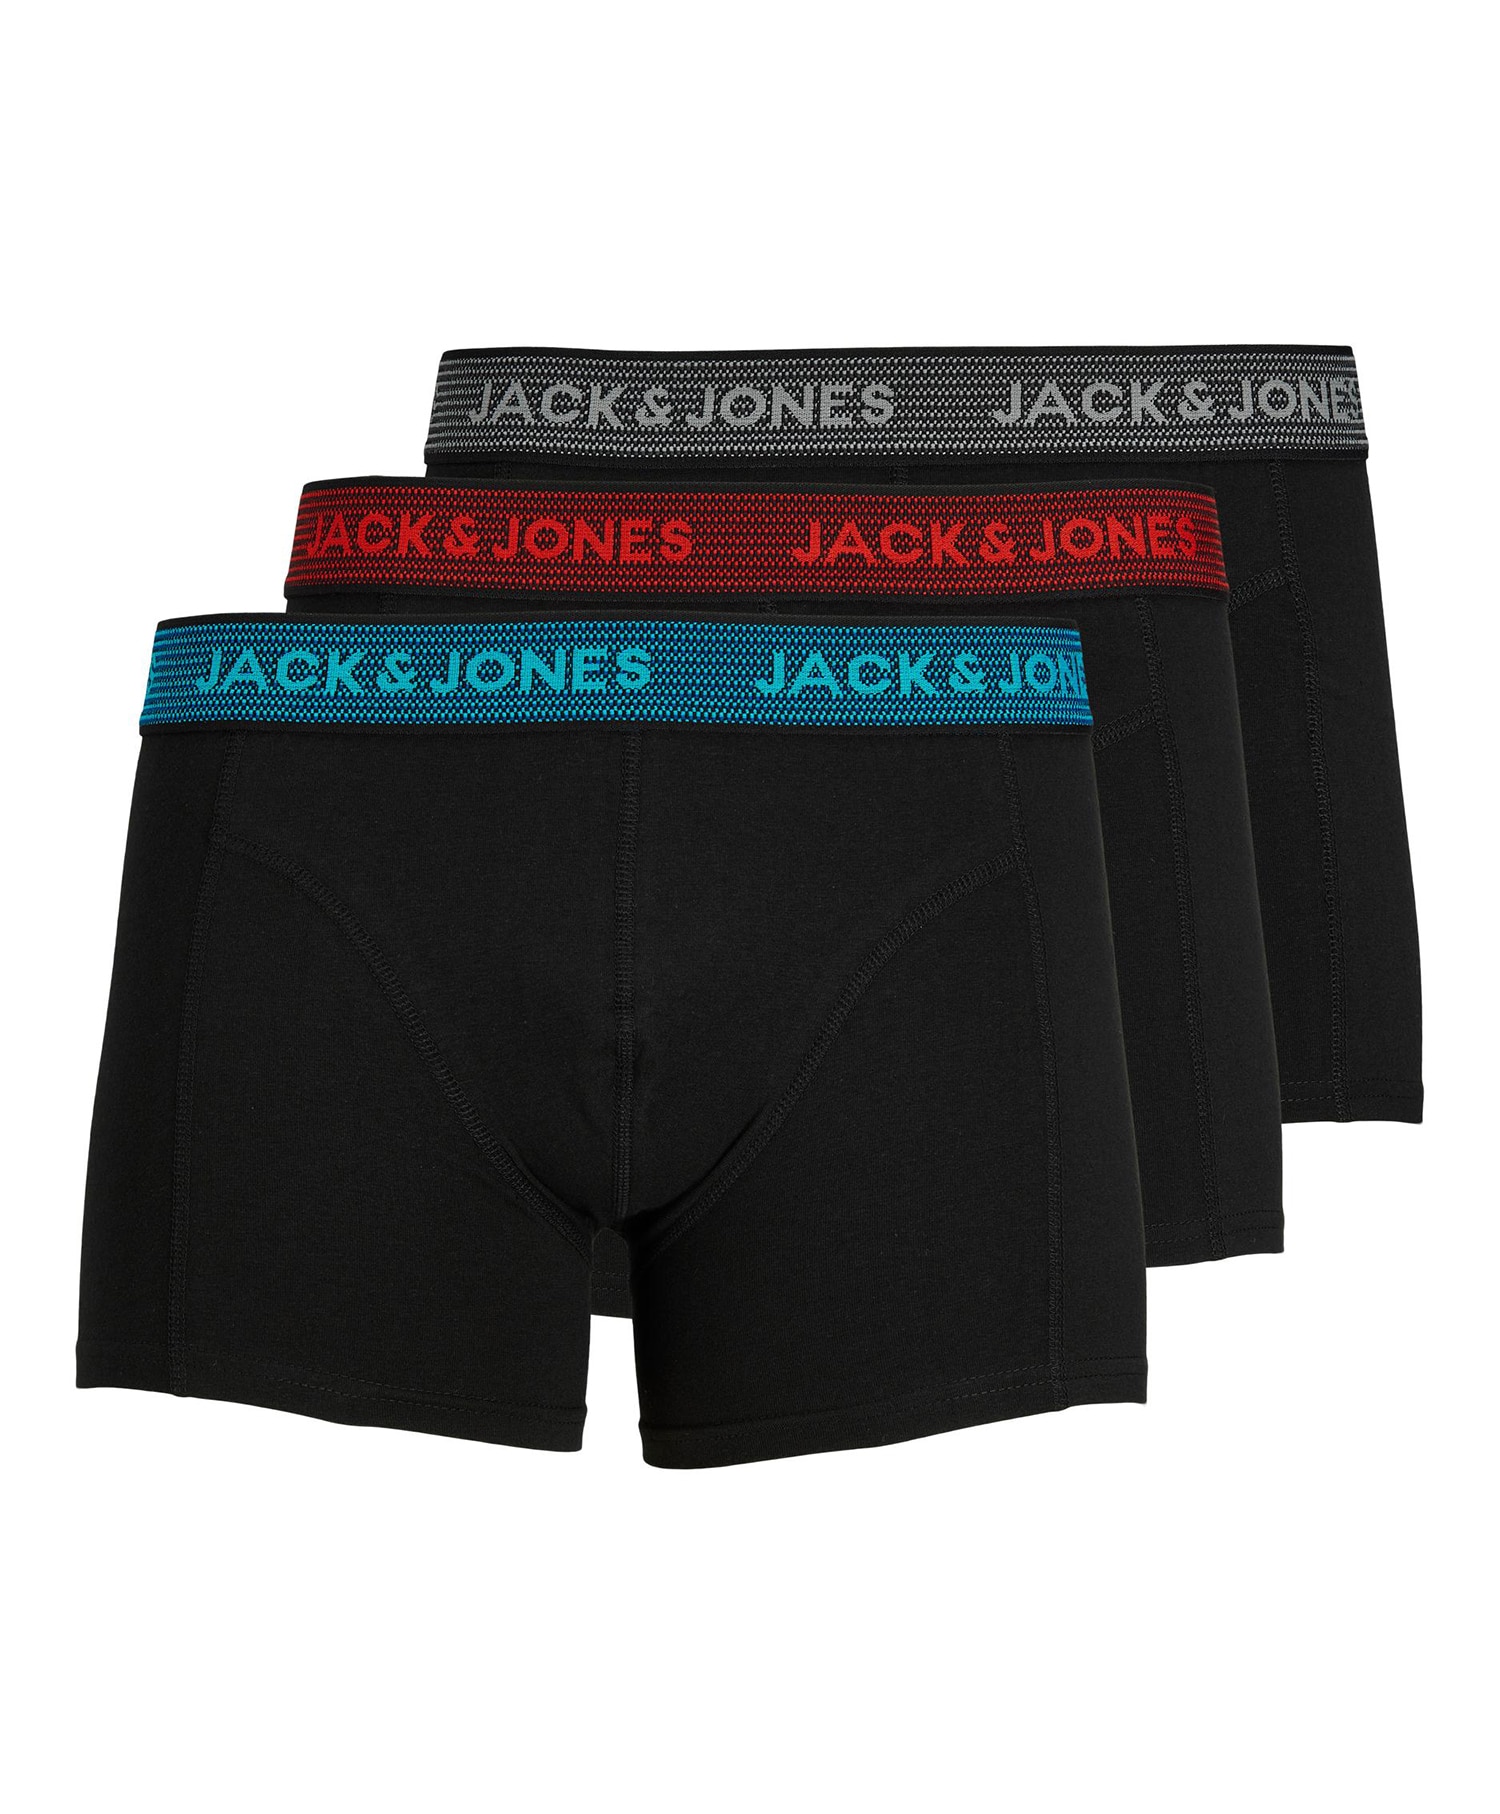 Jack&Jones 3pk Trunks